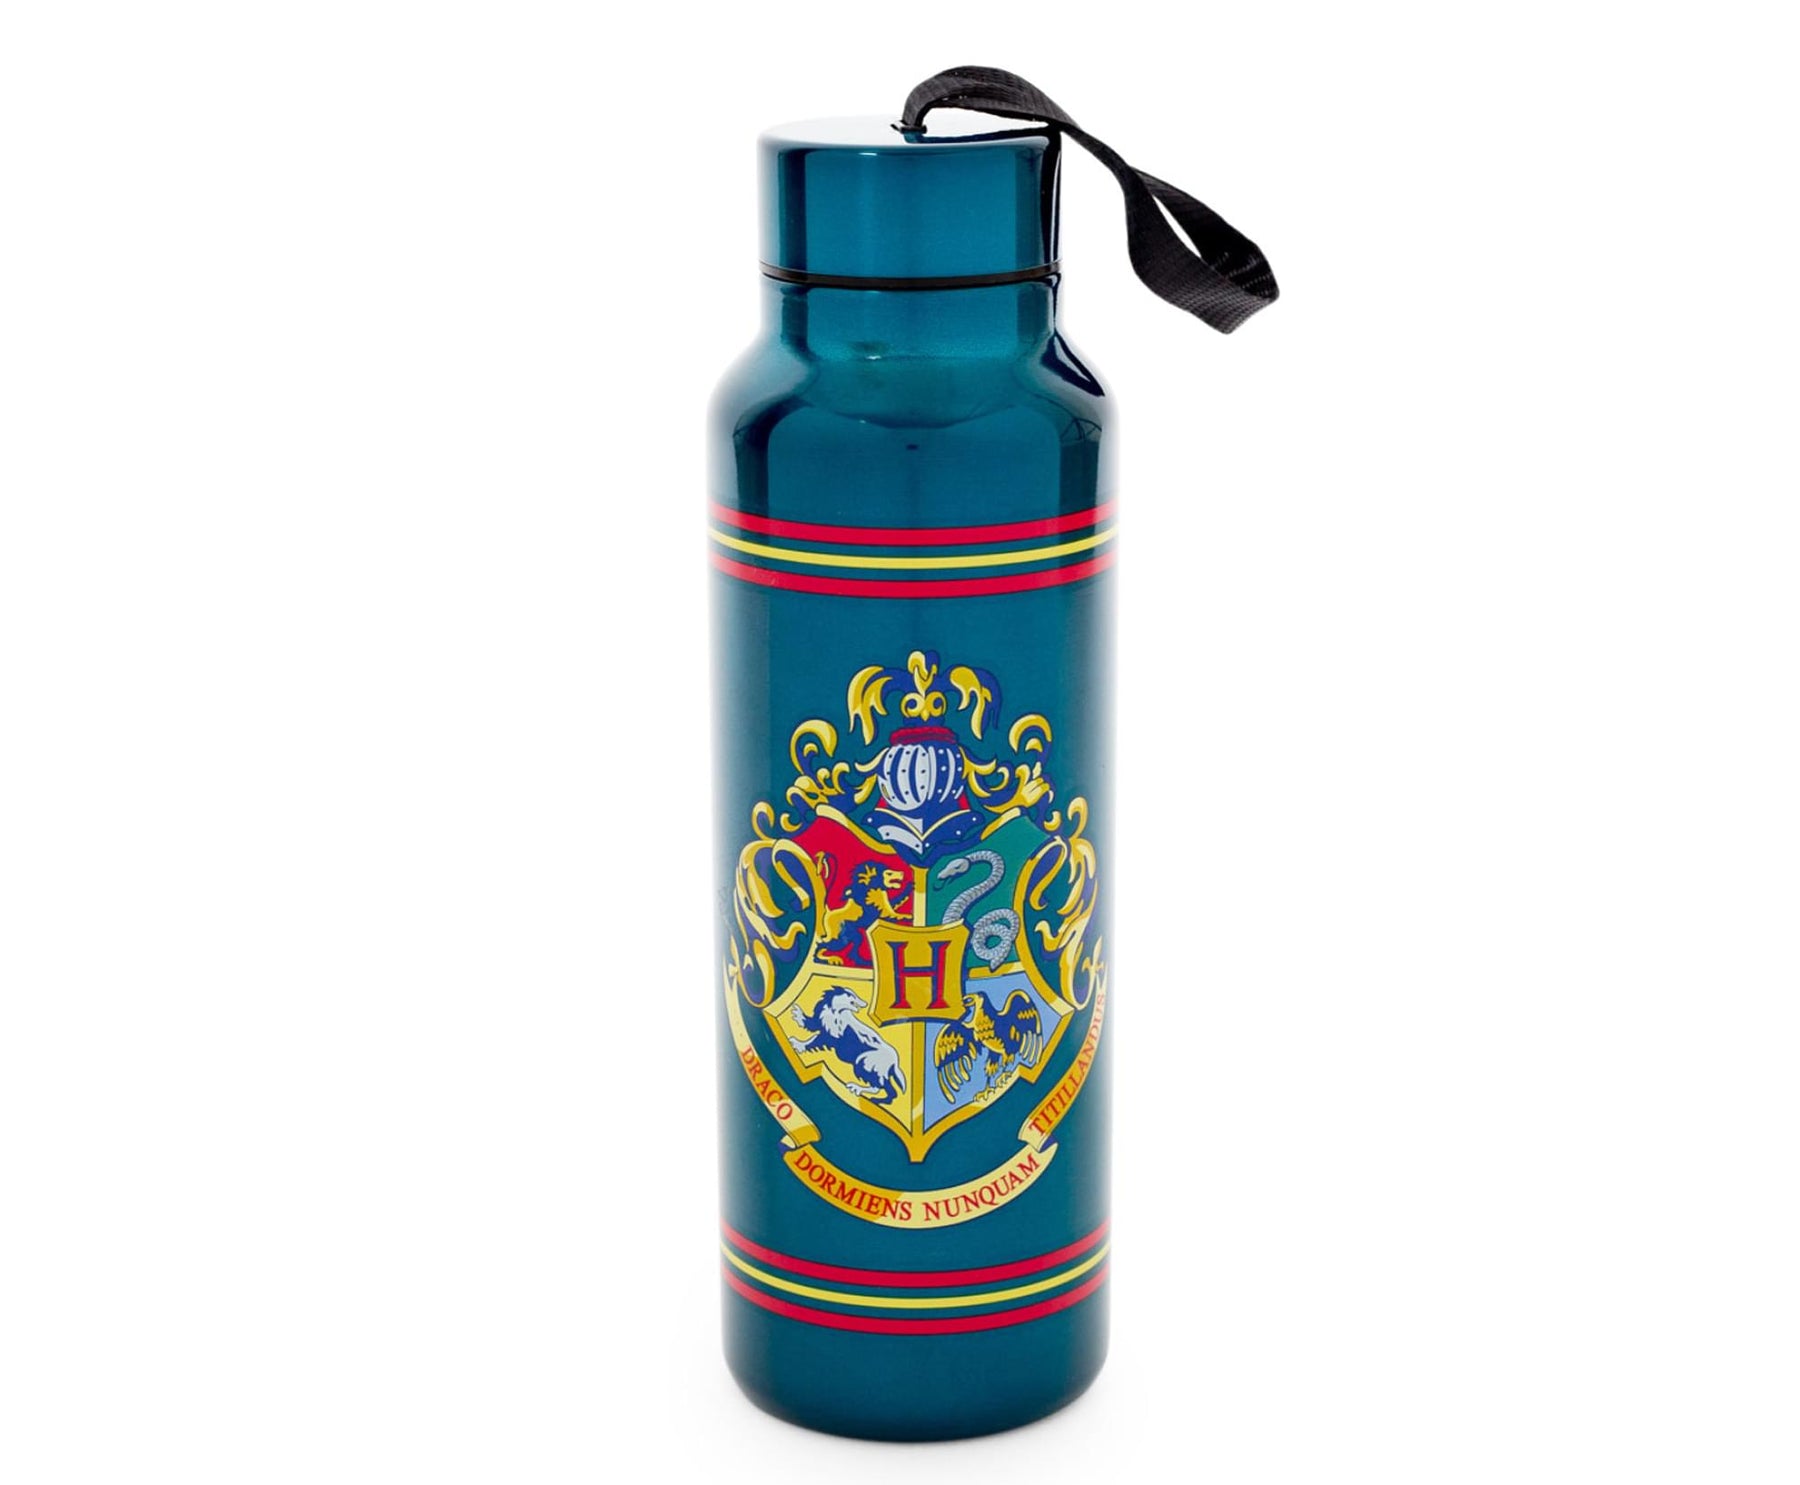 Wizarding World Water Bottles, Harry Potter